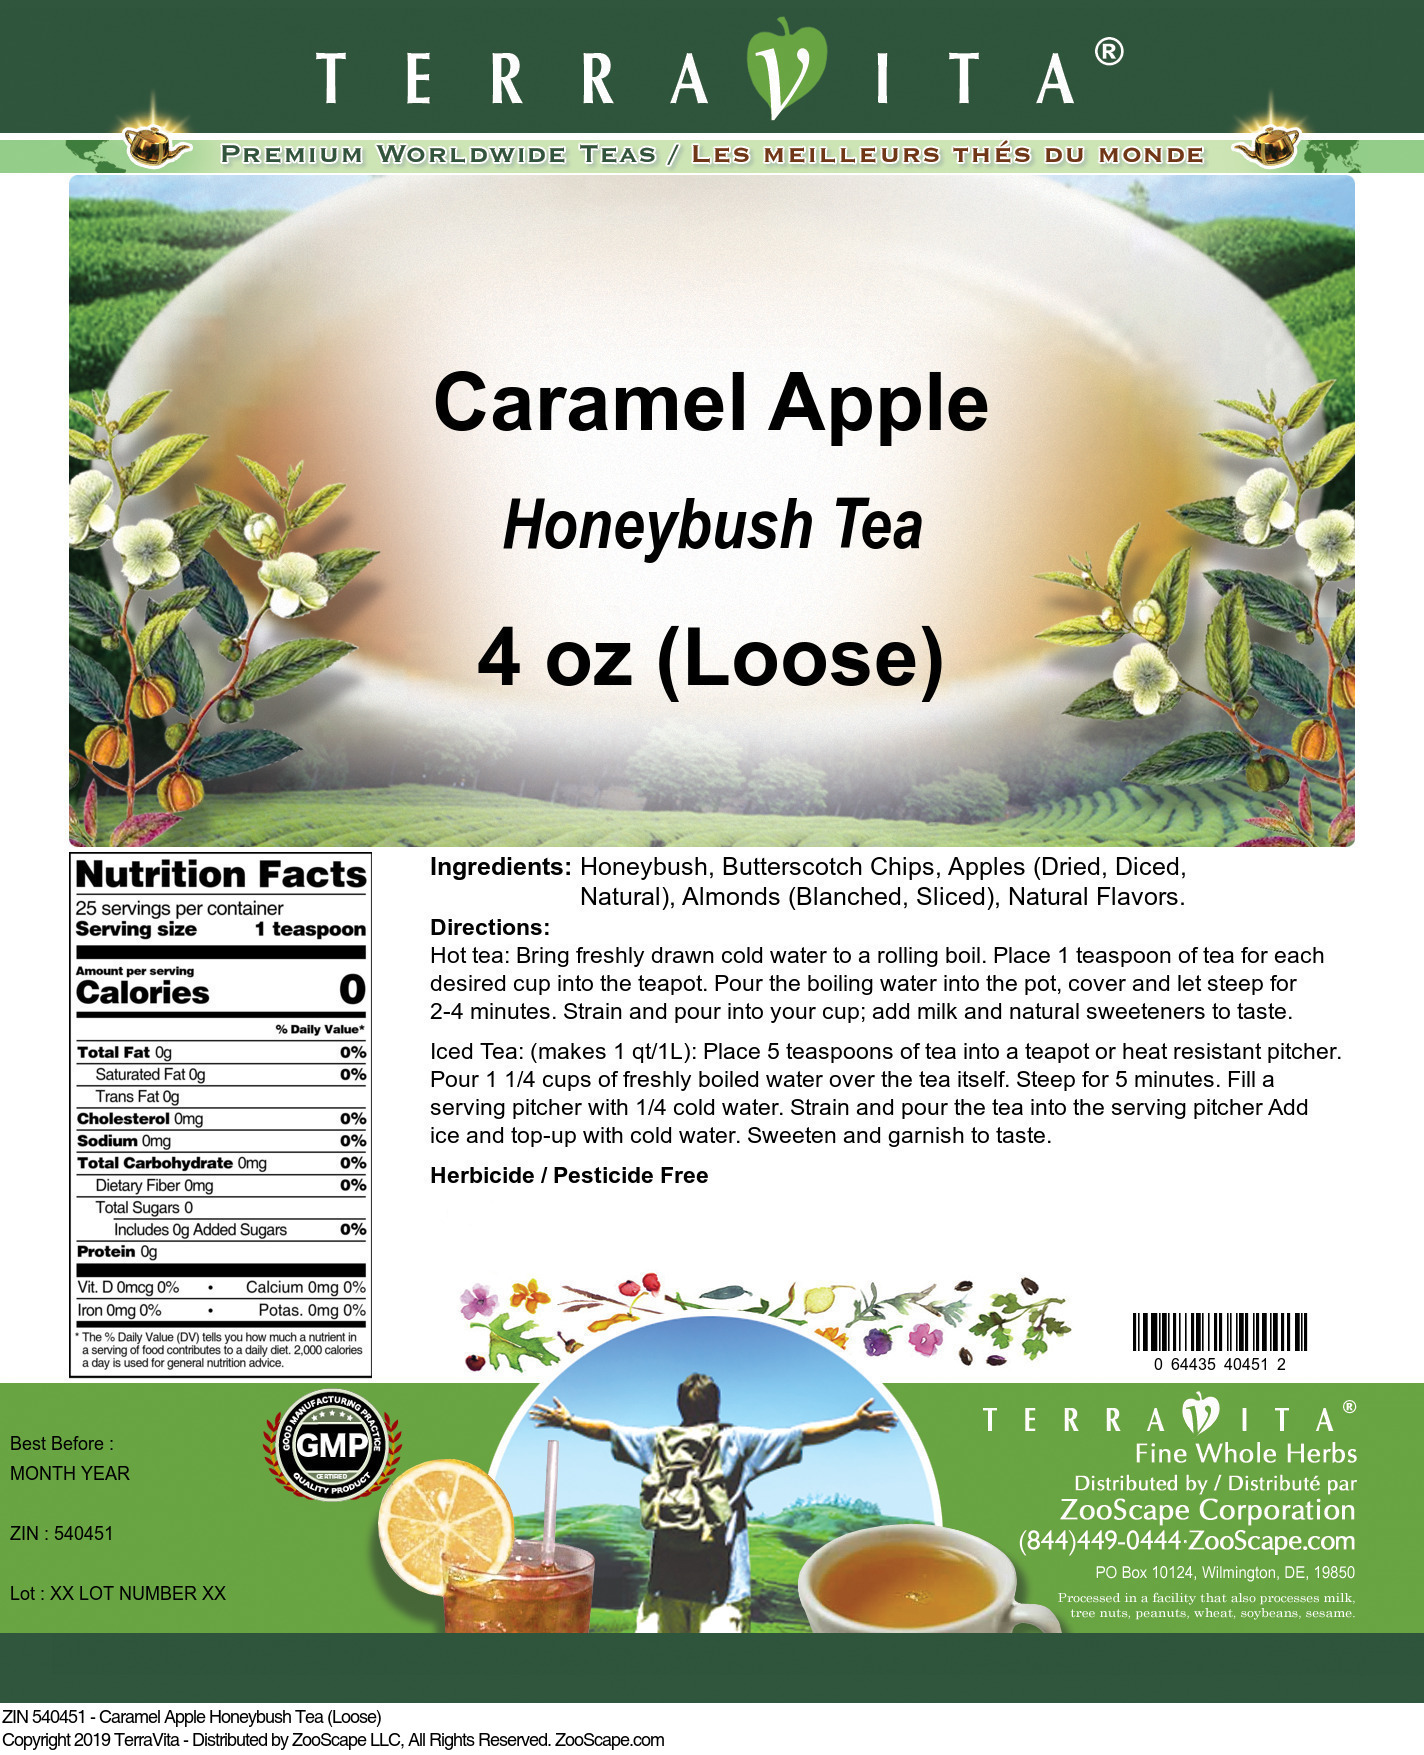 Caramel Apple Honeybush Tea (Loose) - Label